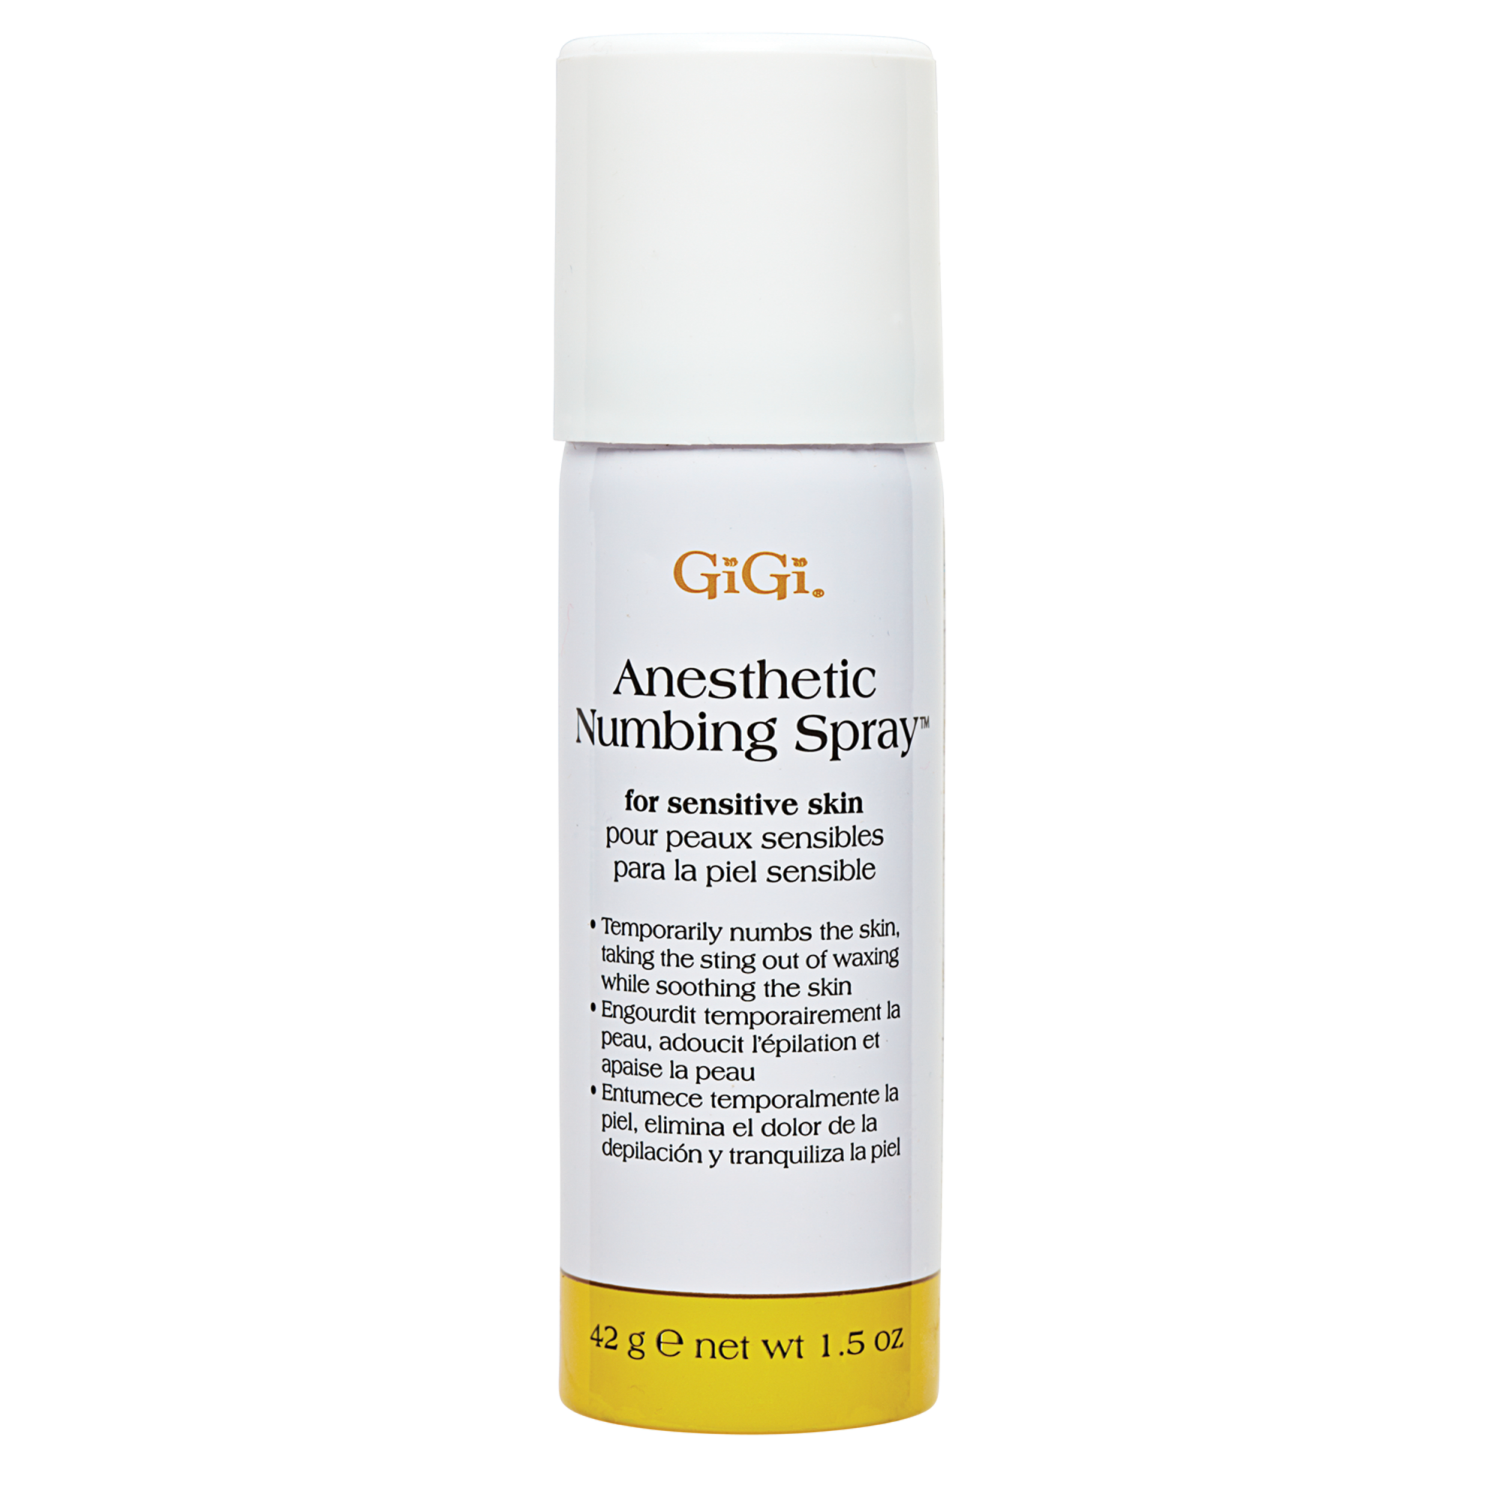 GiGi Anesthetic Numbing Spray